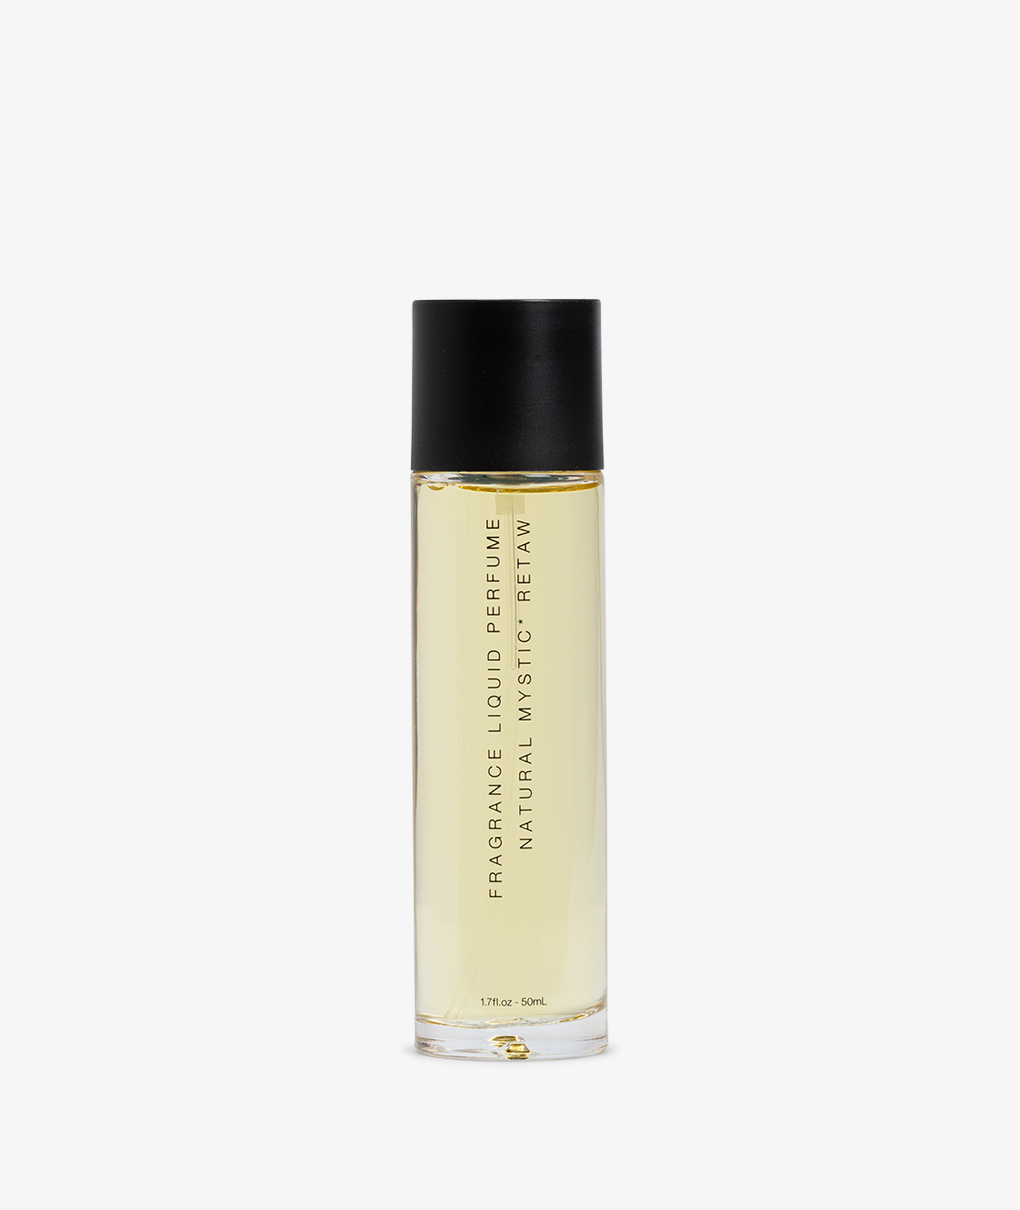 Norse Store | Shipping Worldwide - Fragrance Liquid Perfume by retaW